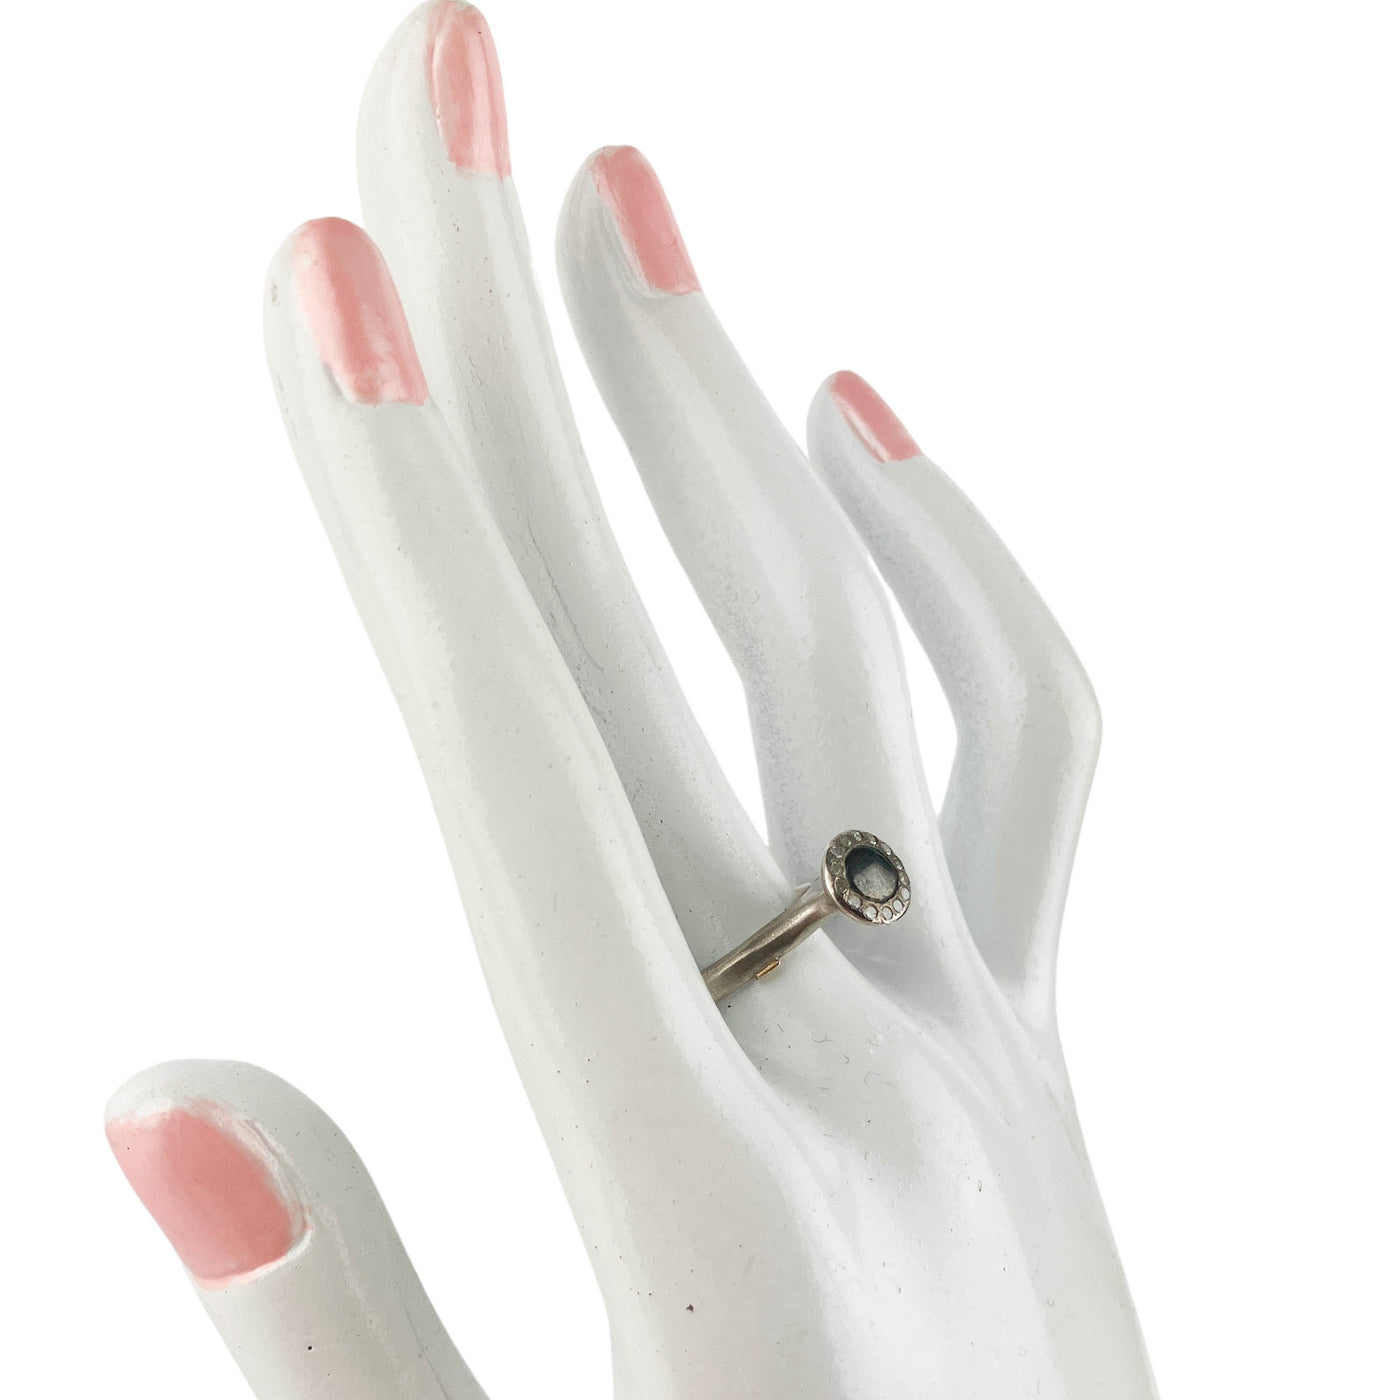 Rosa Maria Silver Ring with Small Dark Silver Pendant - Discounts on Rosa Maria at UAL